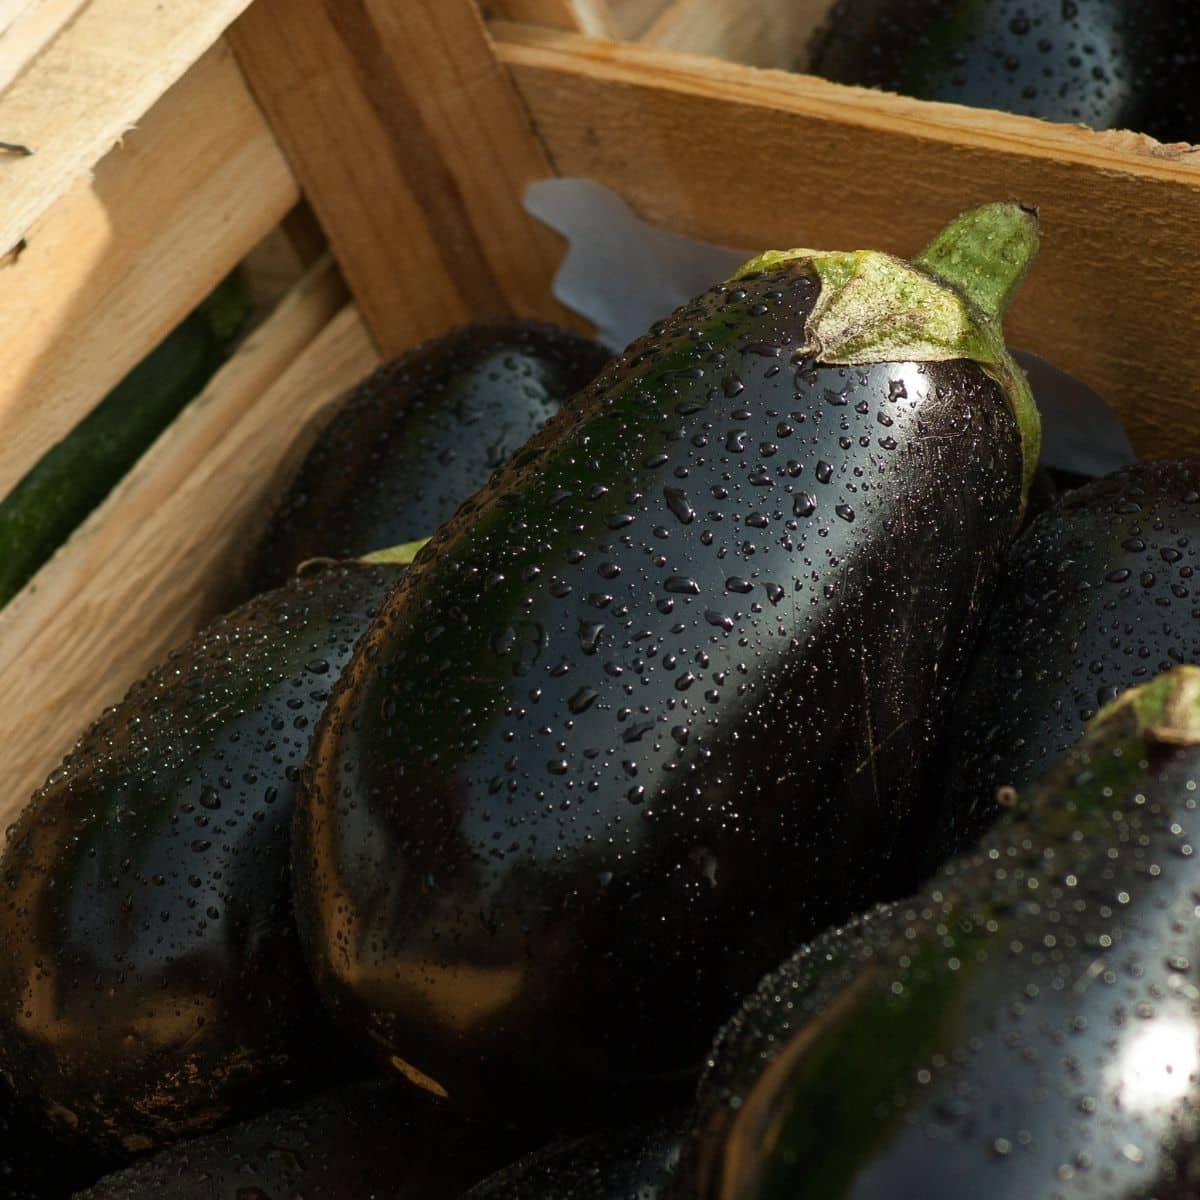 Aubergine vs eggplant image showing fresh eggplants in crate.